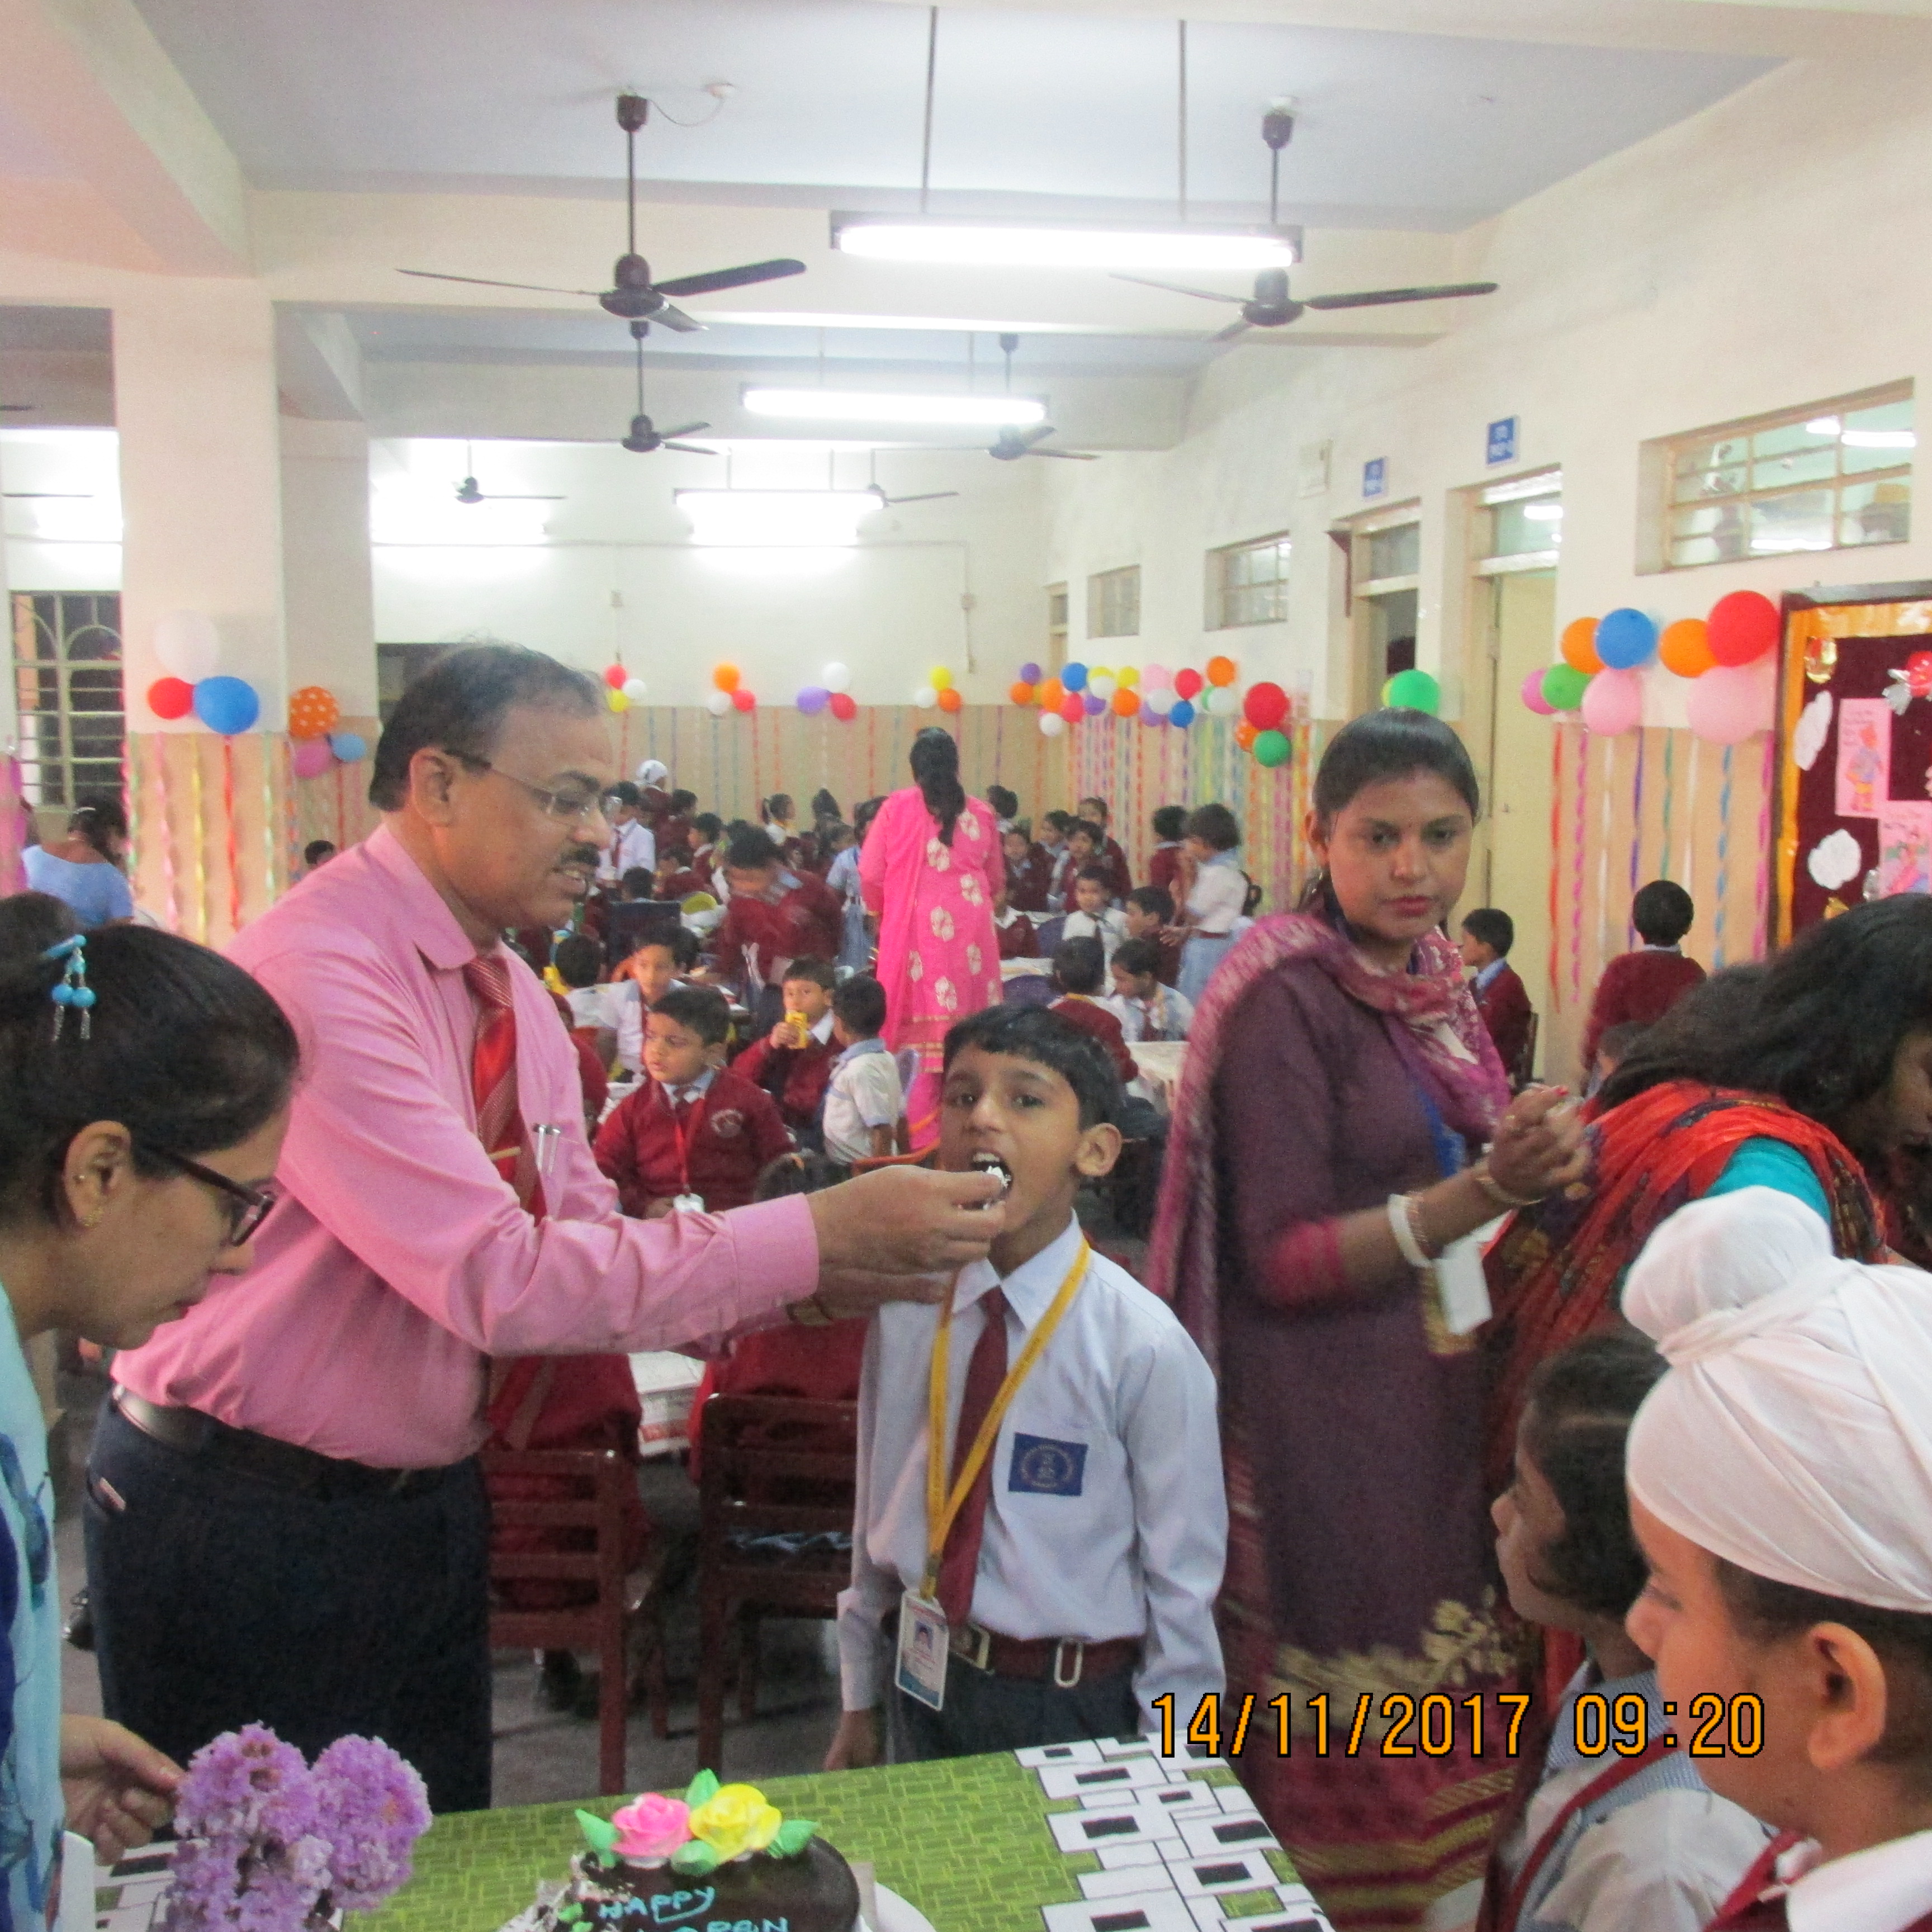 Principal Sir feeding the cake to children